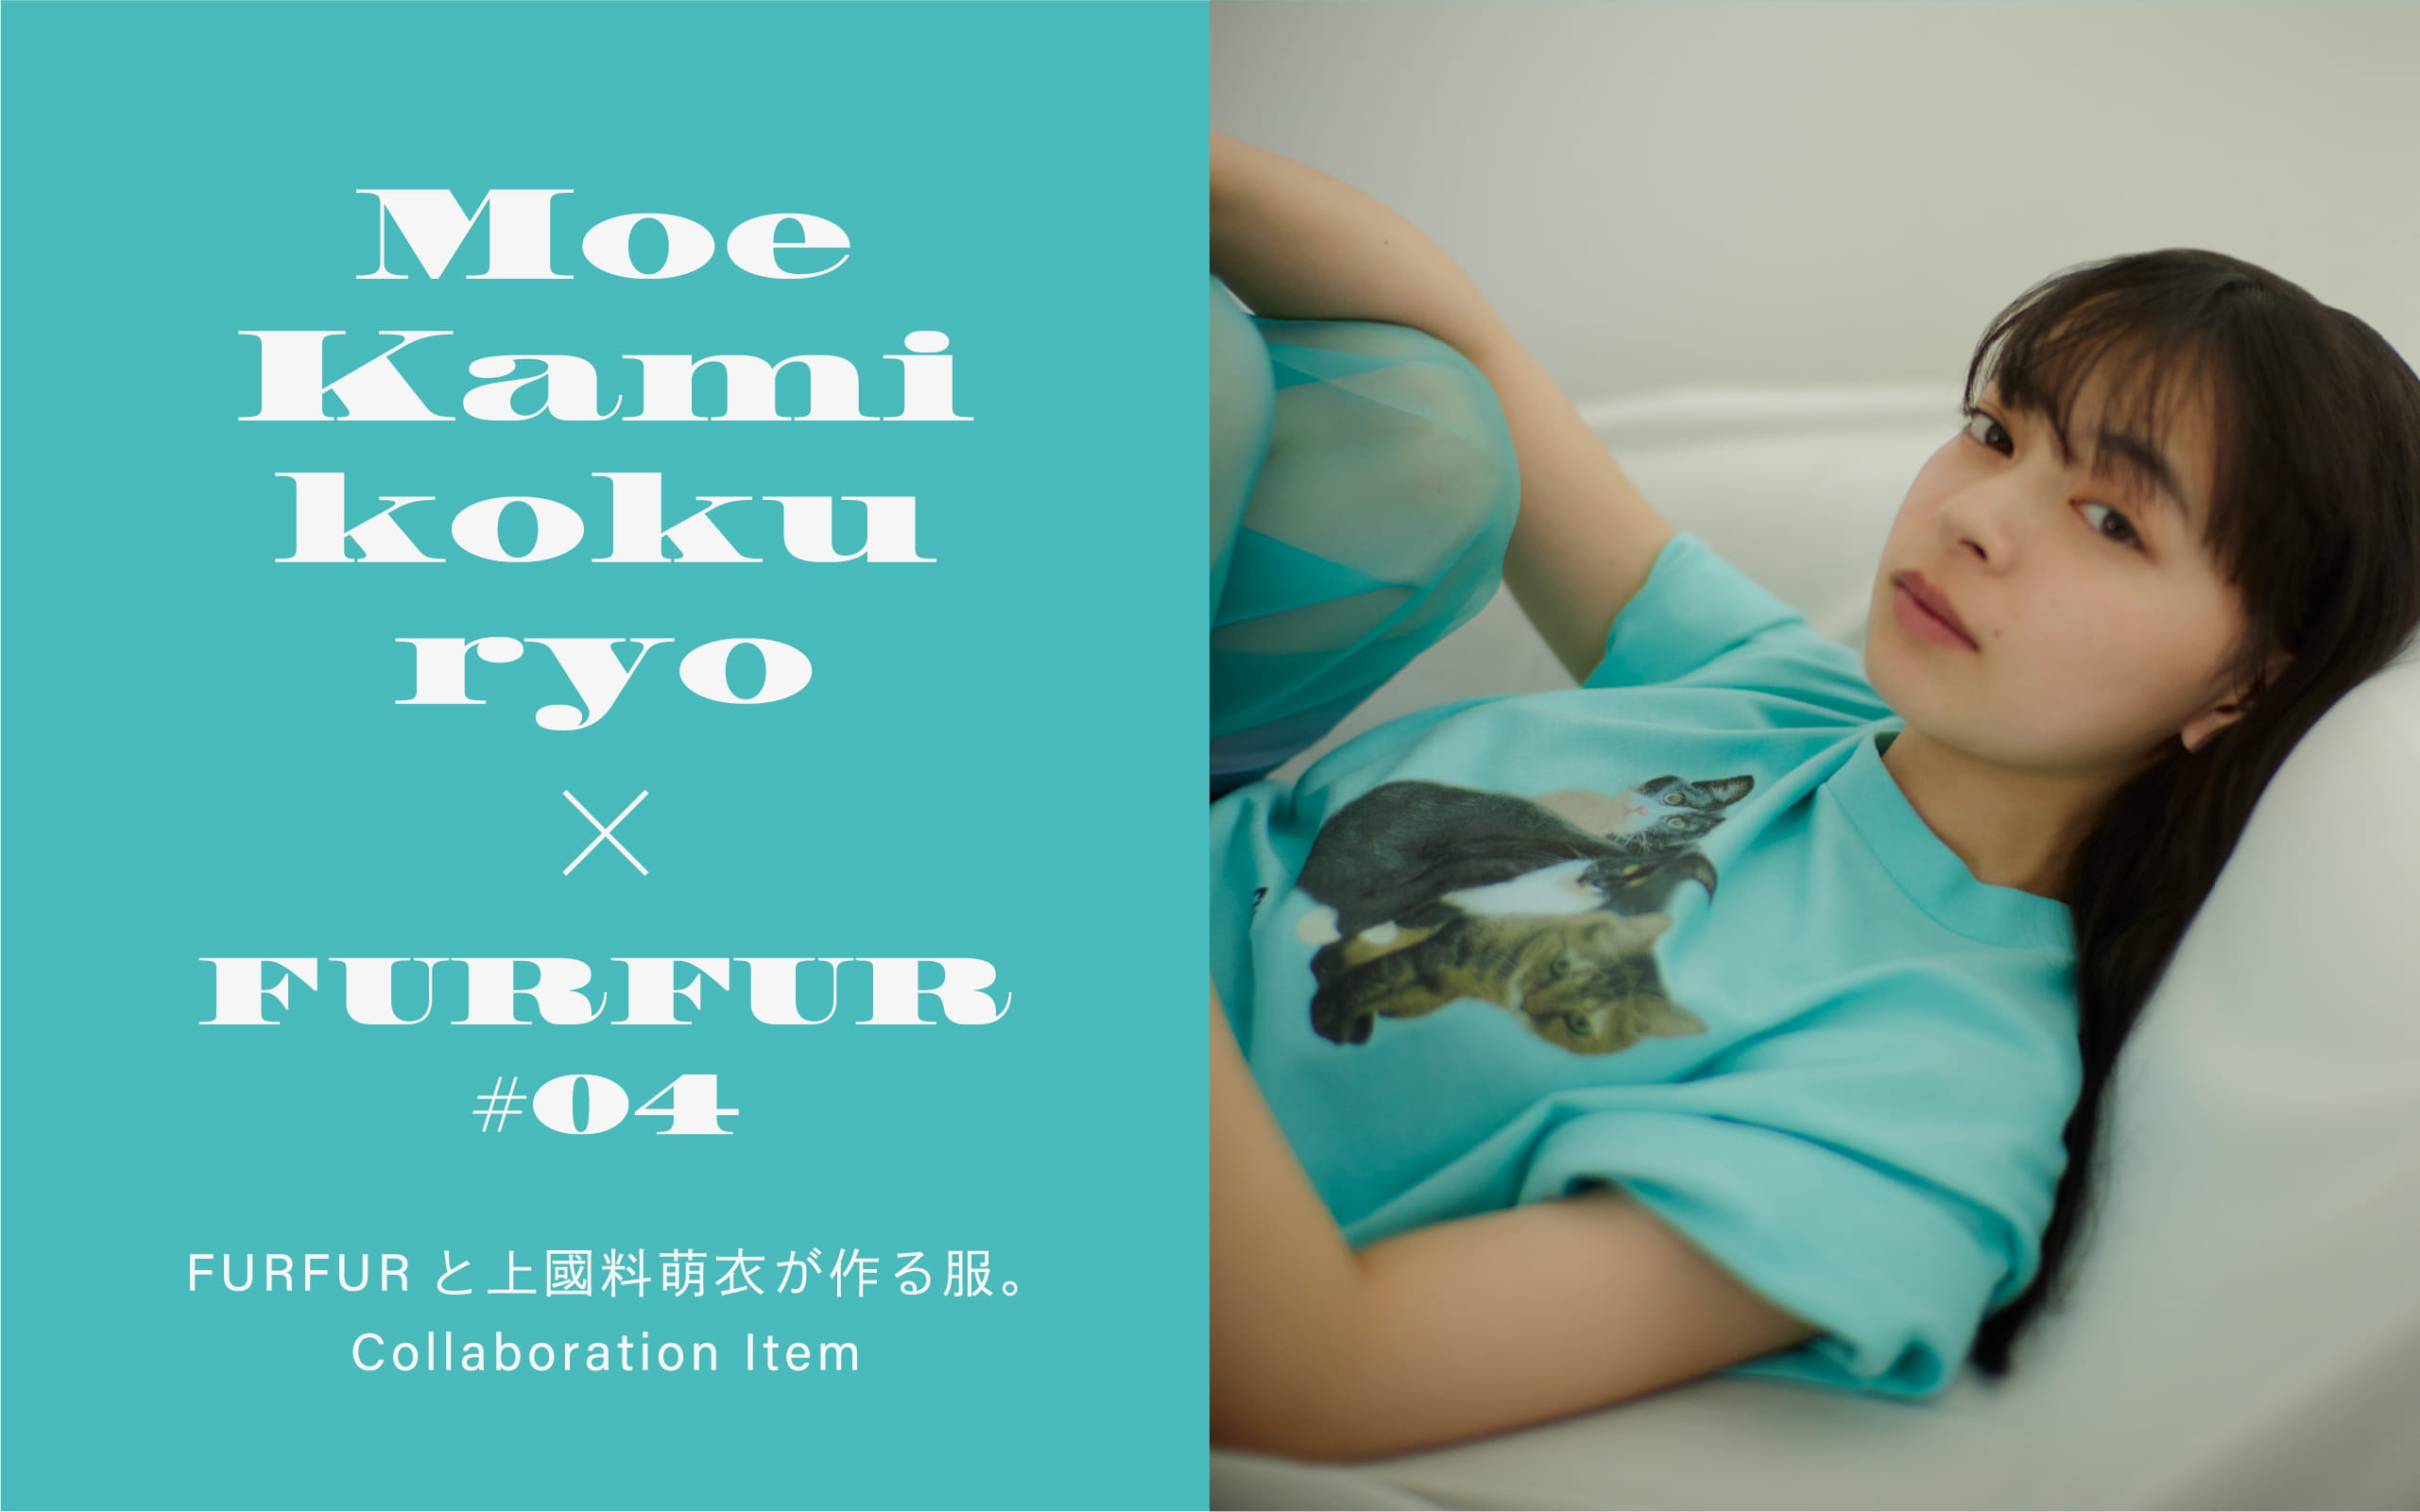 Moe Kami koku ryo FUTURE #04 FURFURと上國料萌衣が作る服。Collaboration Item